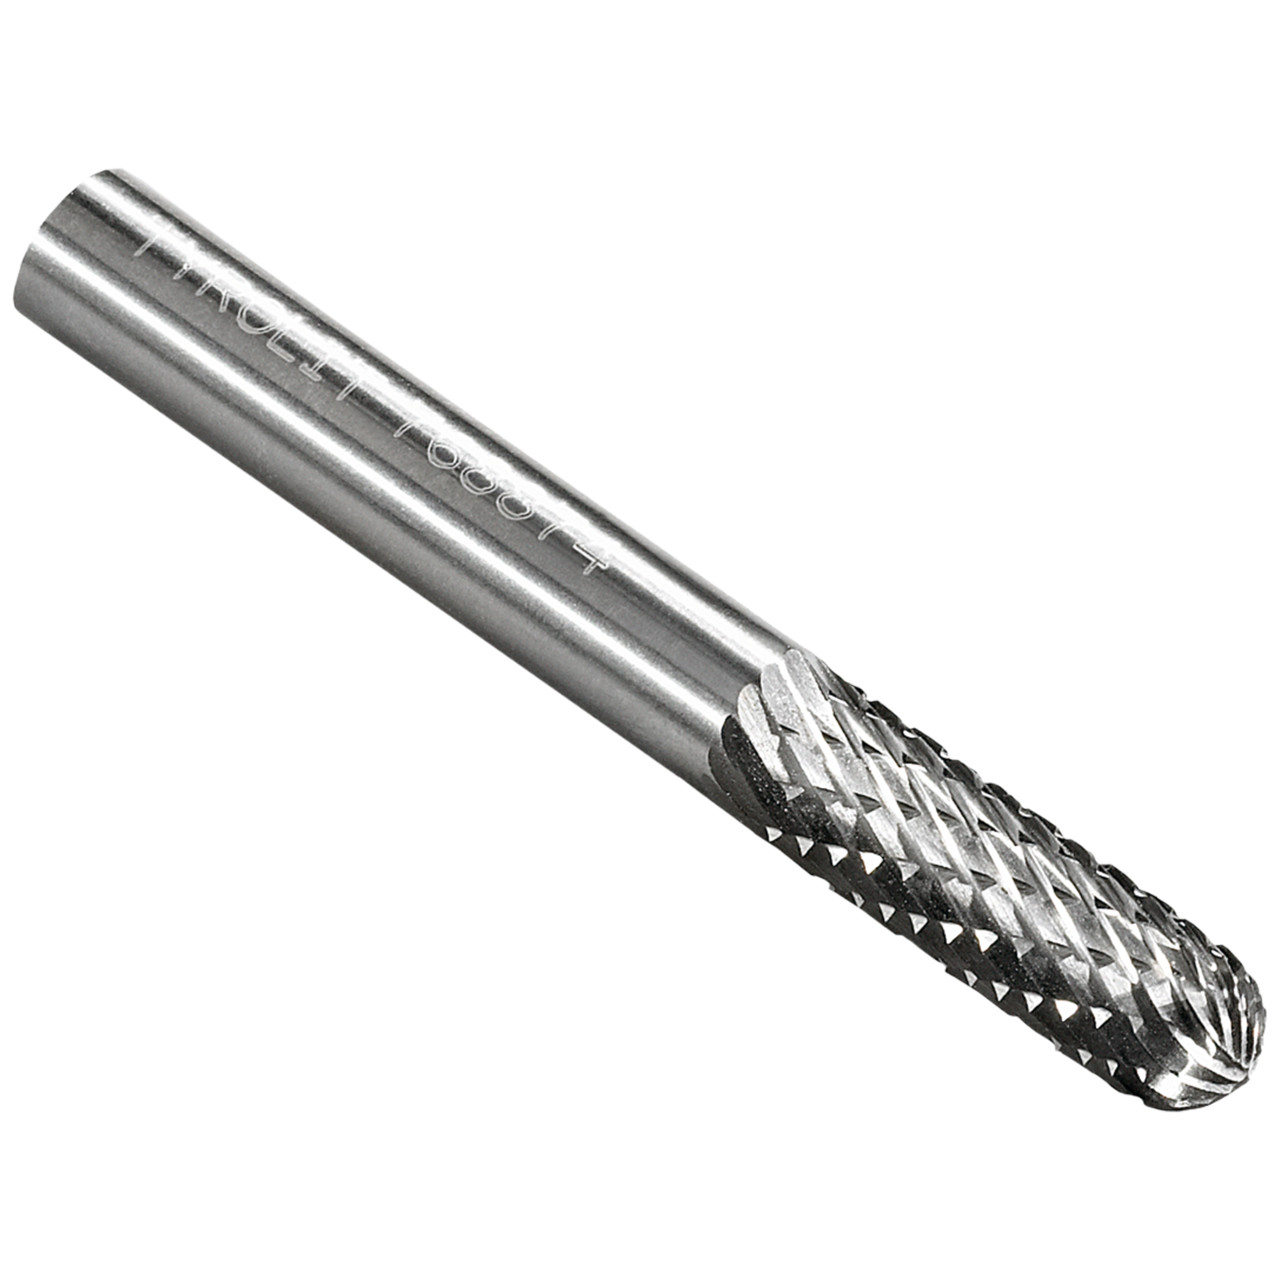 Fresa in metallo duro Tyrolit DxT-SxL 8x19-6x65 Per ghisa, acciaio e acciaio inox, forma: 52WRC - cilindrica, Art. 768878